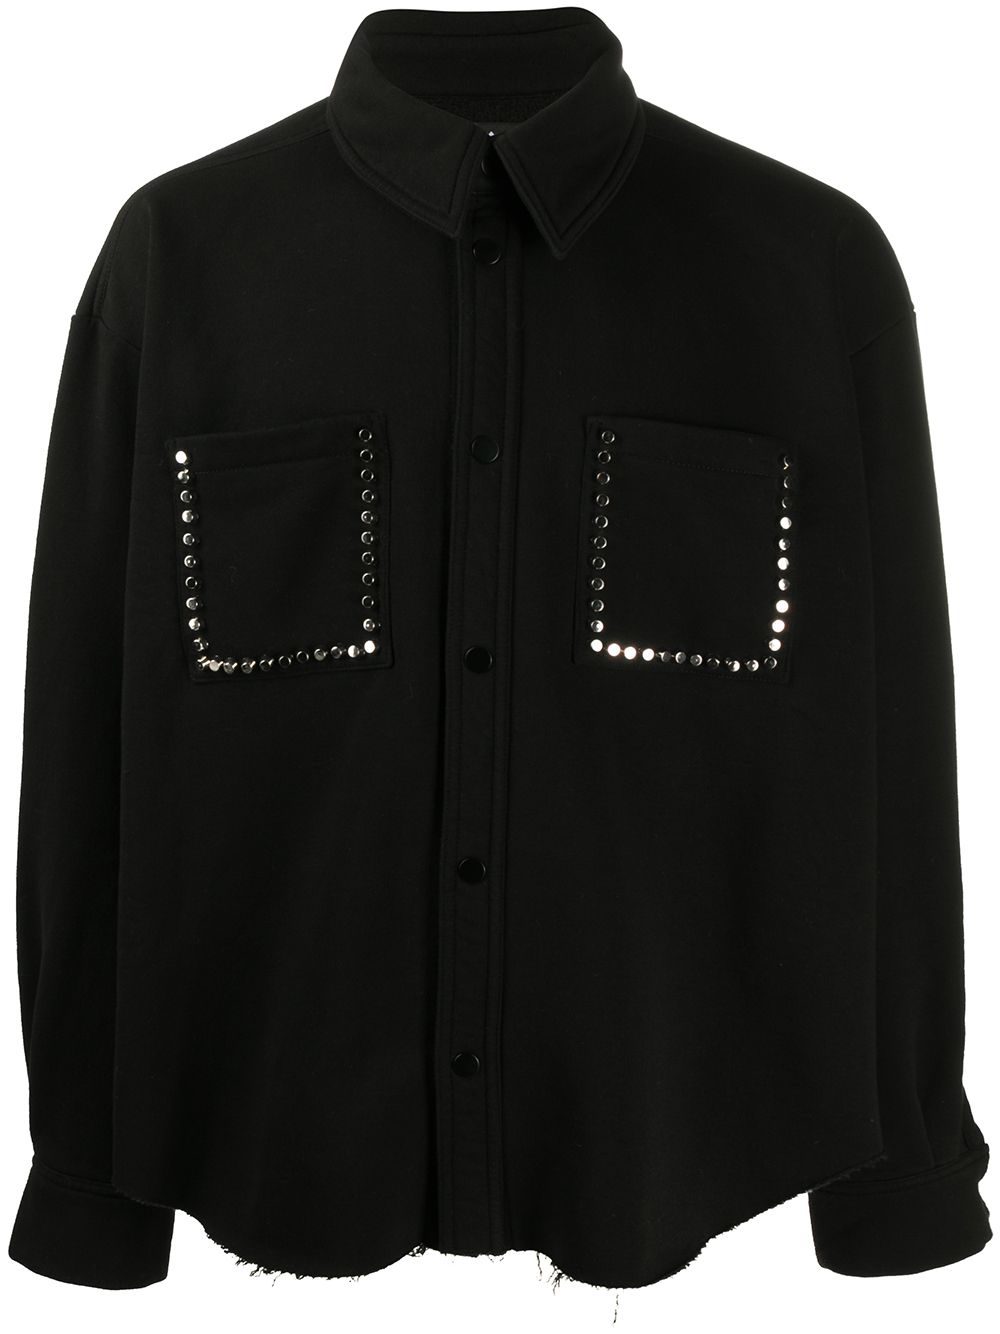 DUOltd embellished oversized shirt - Black